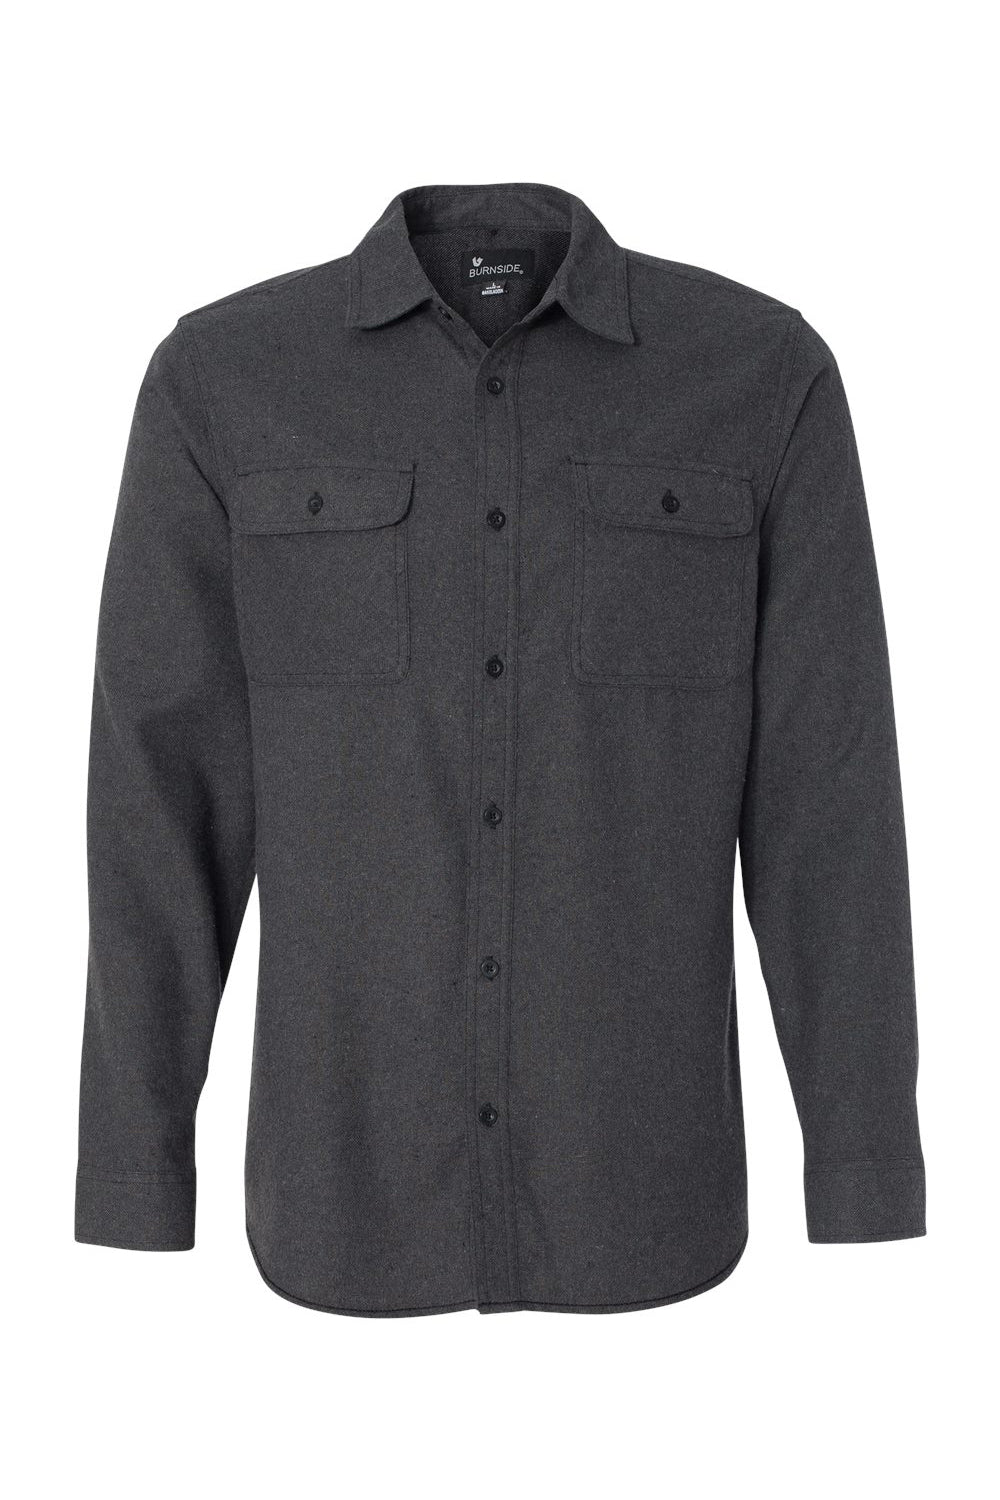 Burnside BU8200/8200 Mens Flannel Long Sleeve Button Down Shirt w/ Double Pockets Charcoal Grey Flat Front